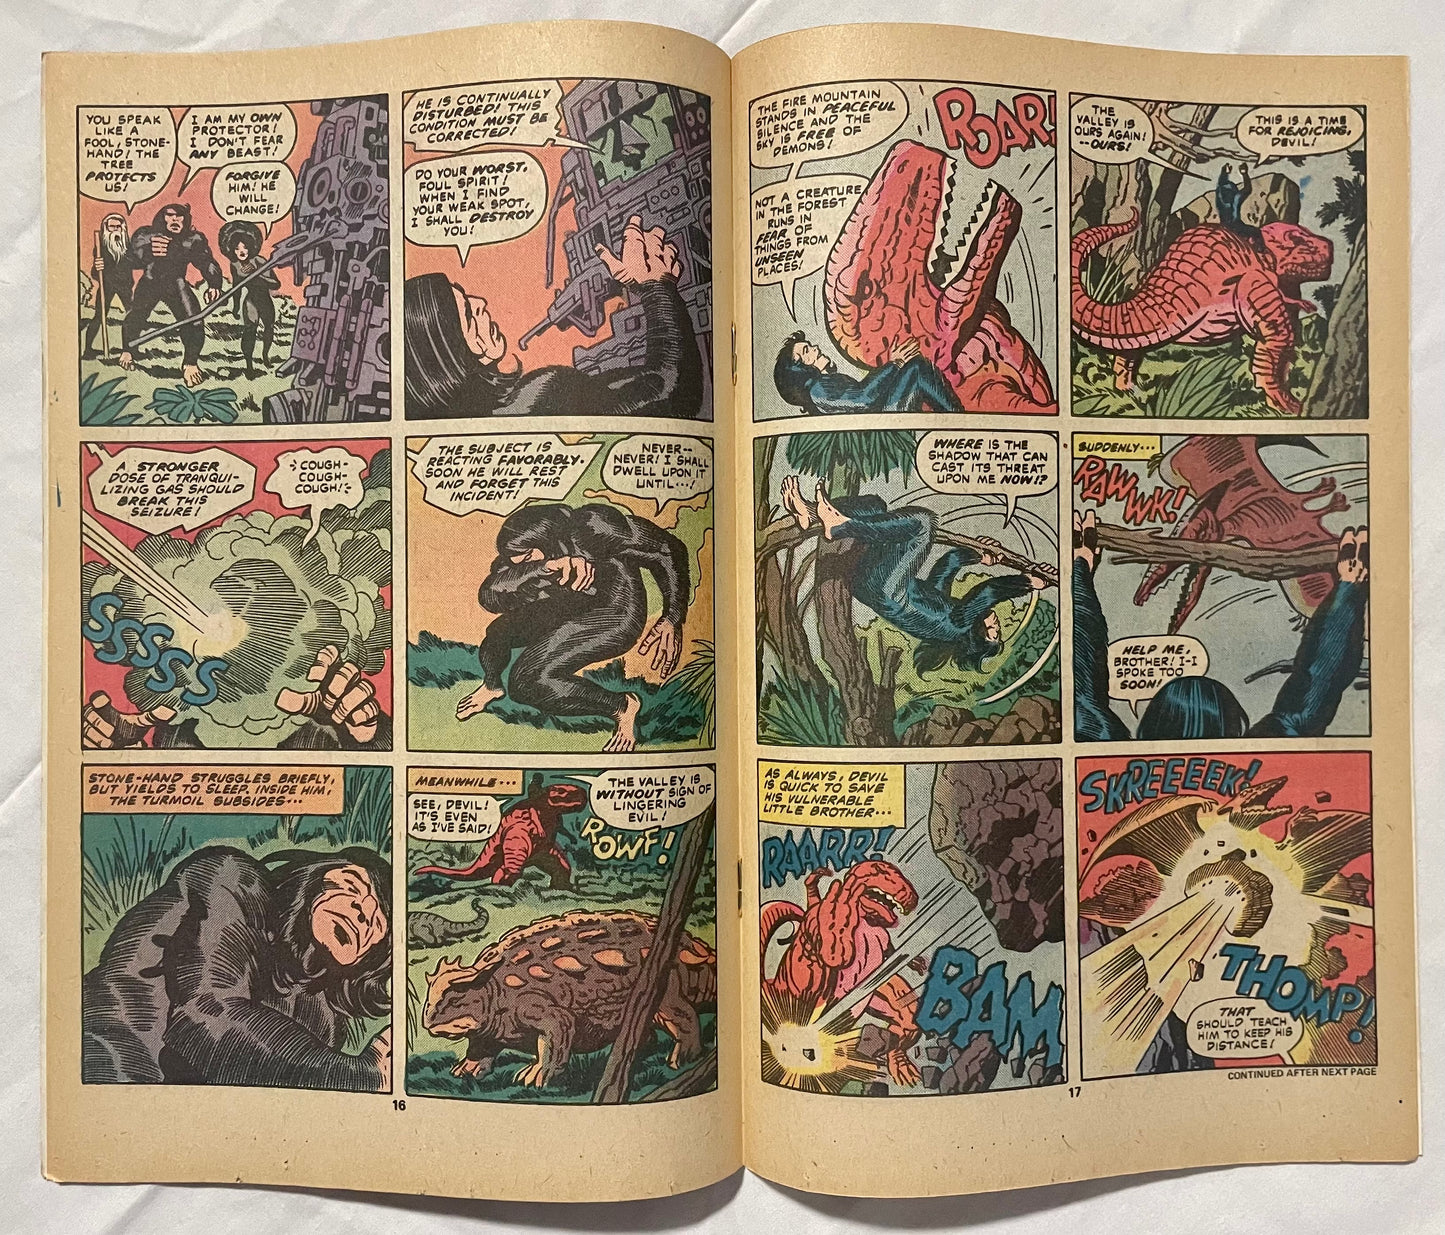 Marvel Comics Devil Dinosaur #7